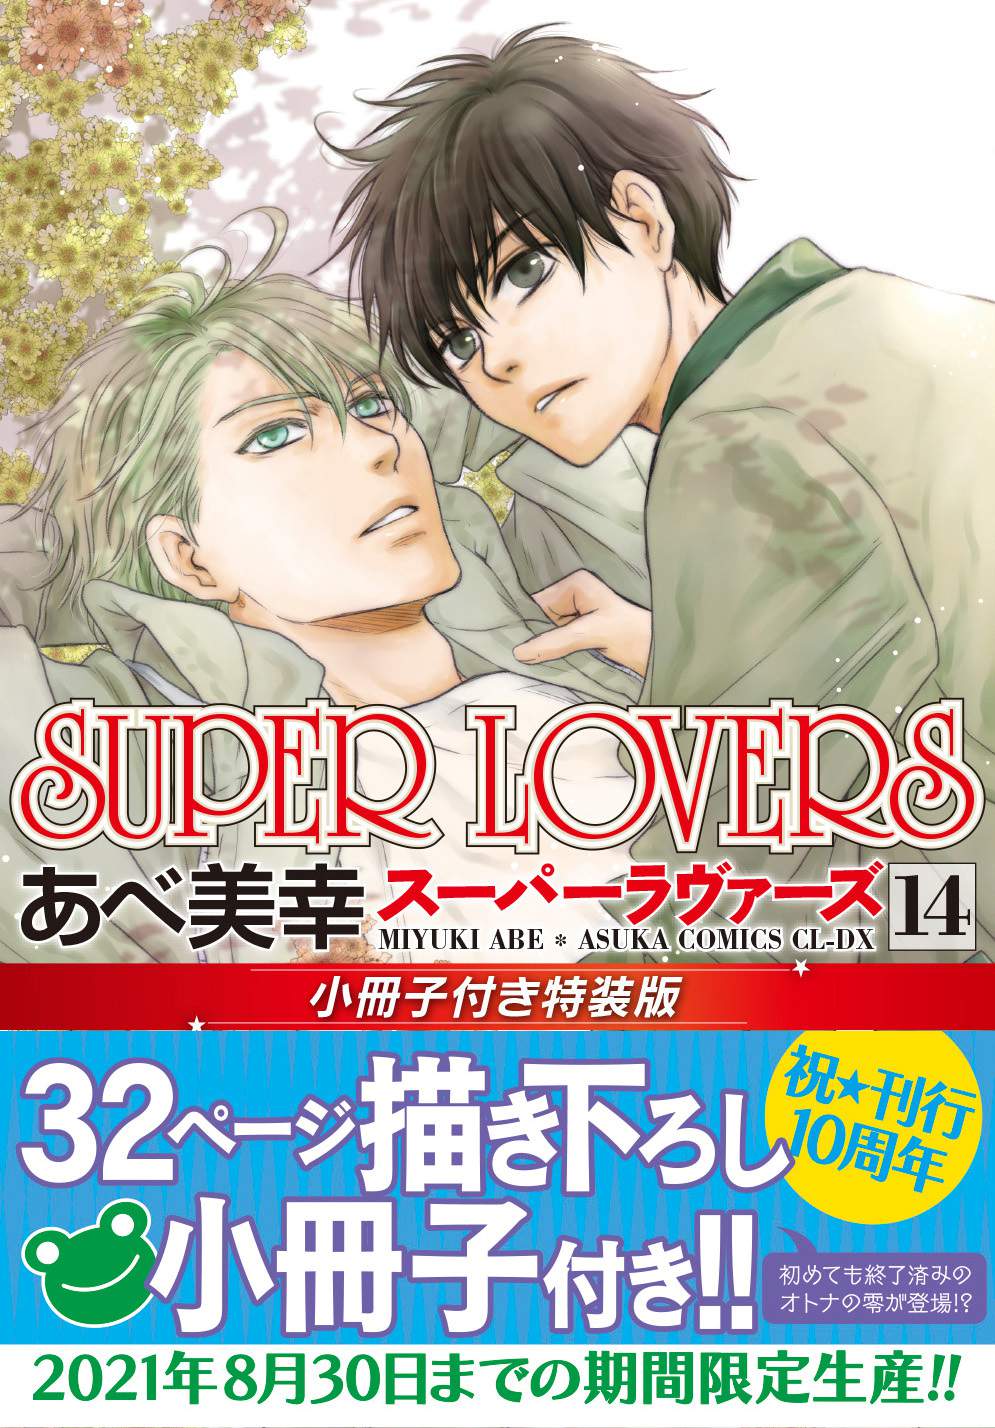 BL漫画「SUPER LOVERS 14」9月1日发售 新封面抢先公开